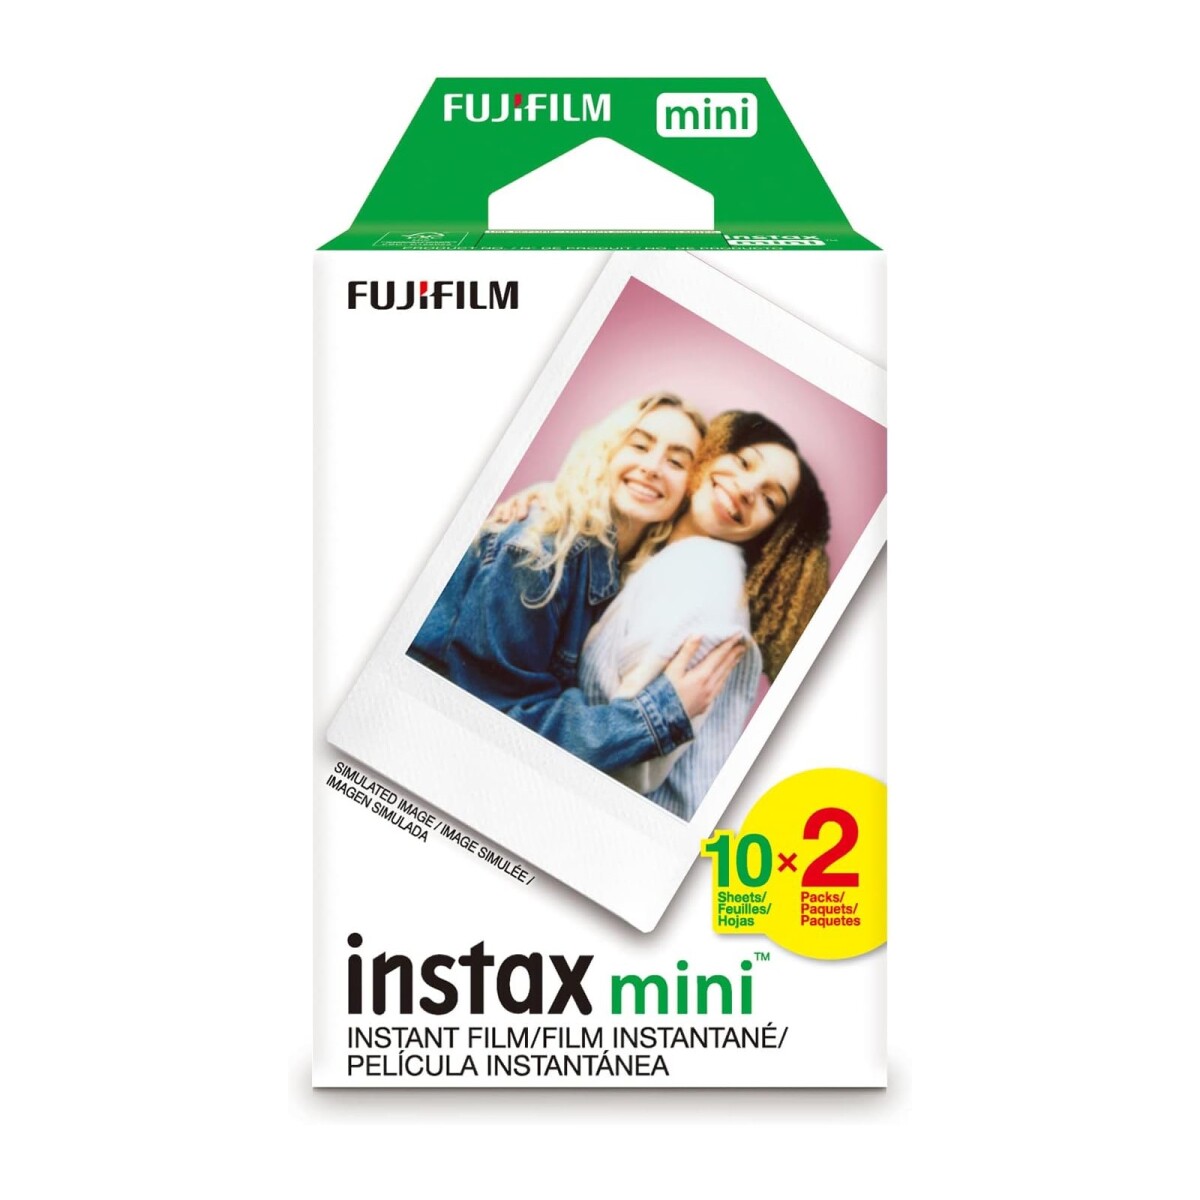 INSTAX MINI FILM FUJIFILM 10 SHEETS x 2PACKS - White 